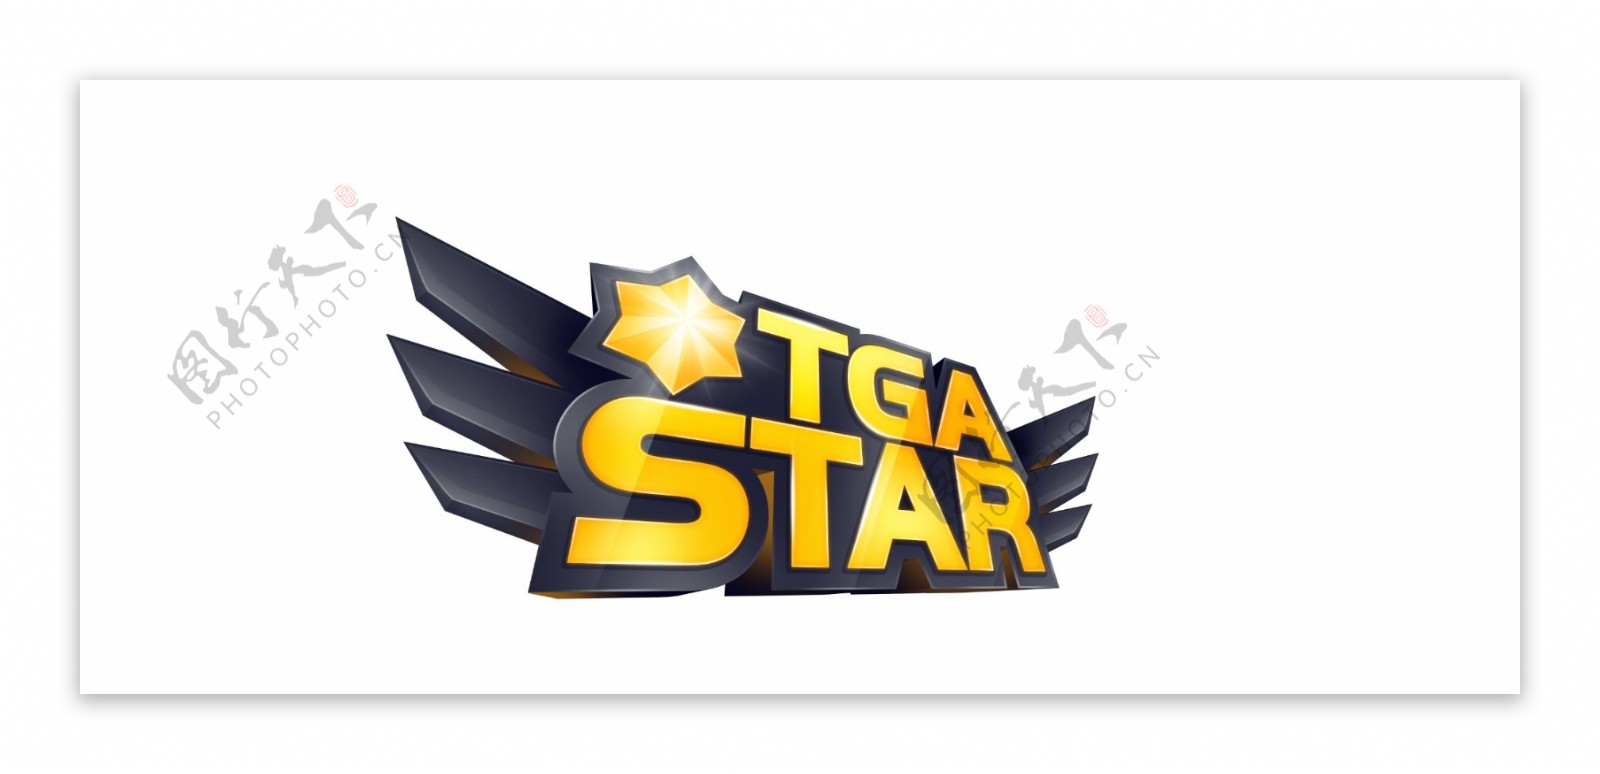 tgastar腾讯游戏logo图片